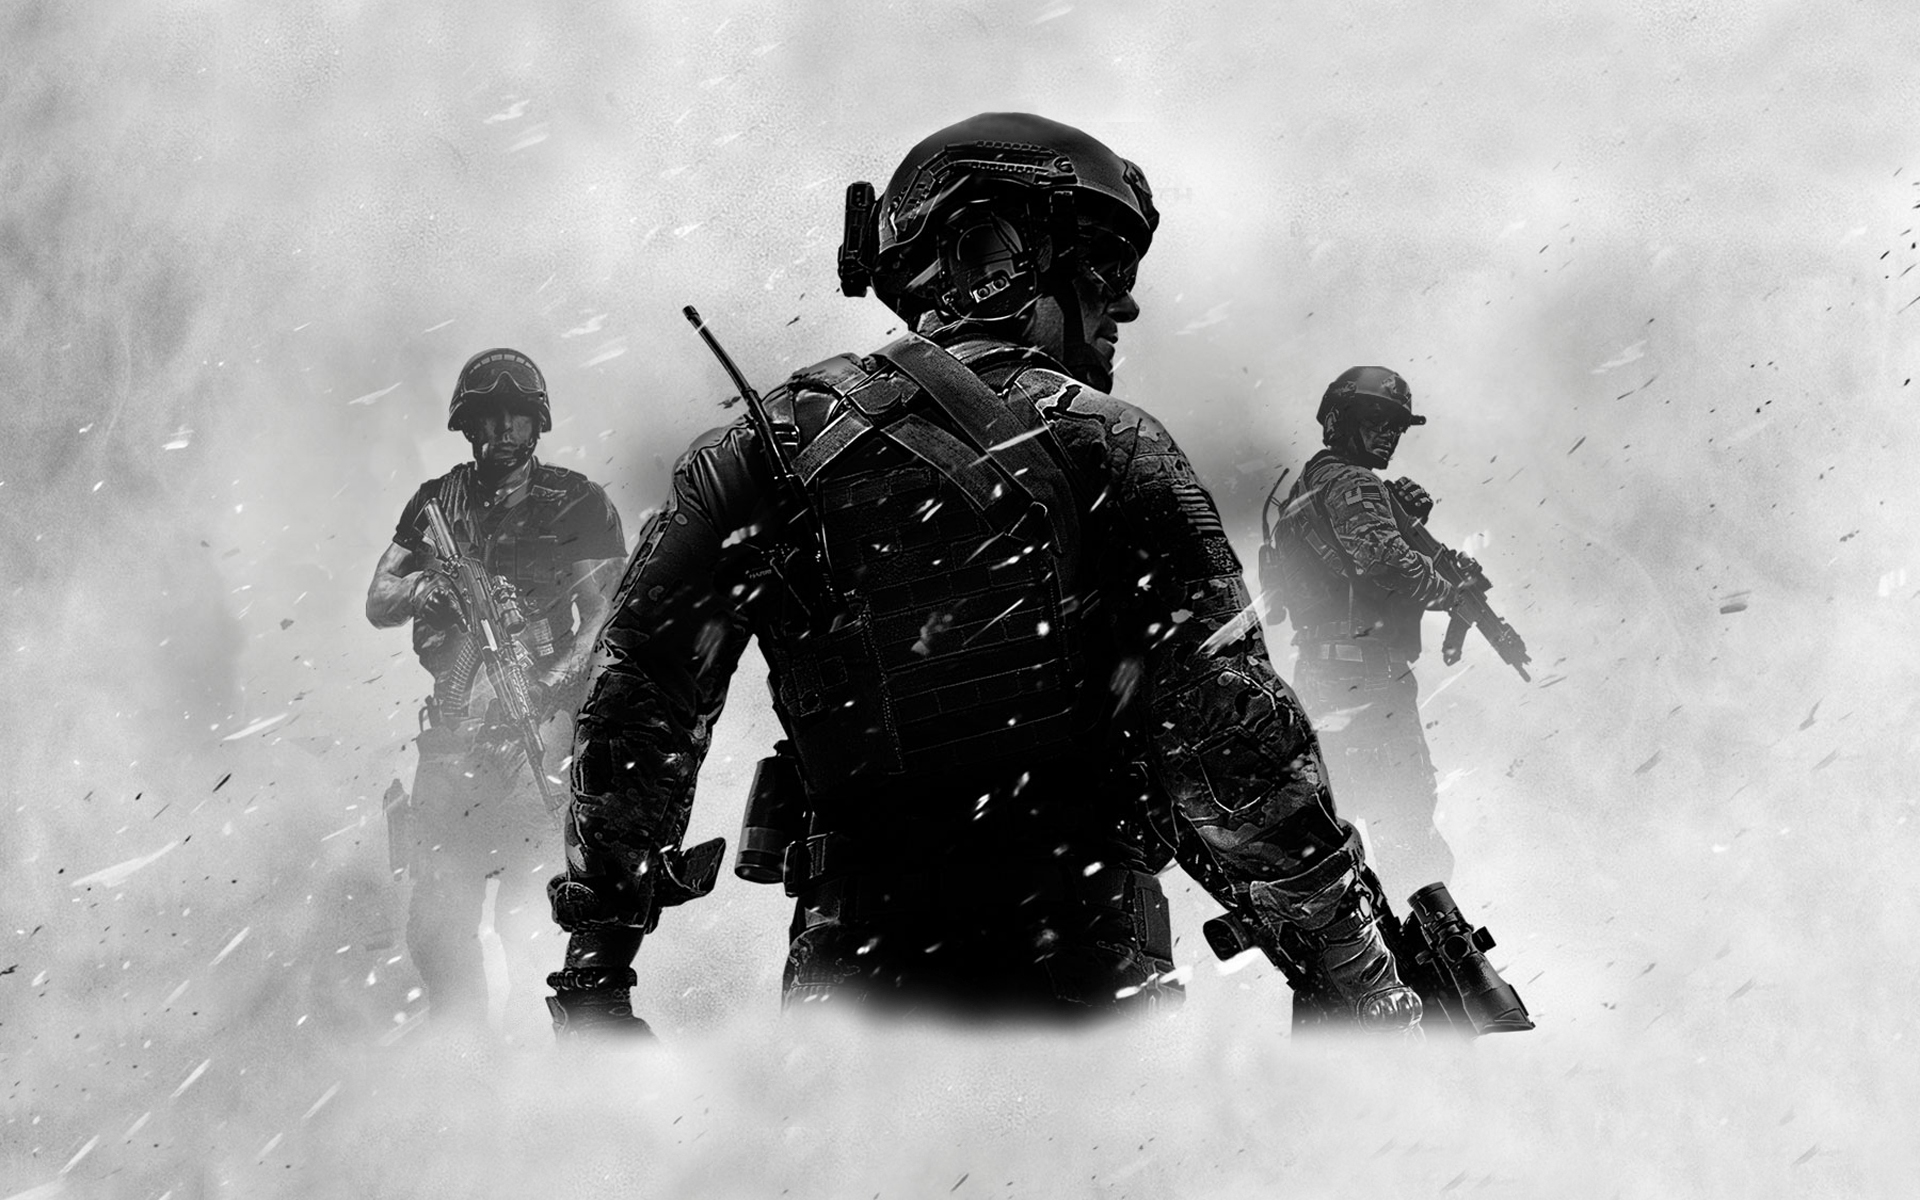 Call of Duty Modern Warfare poster